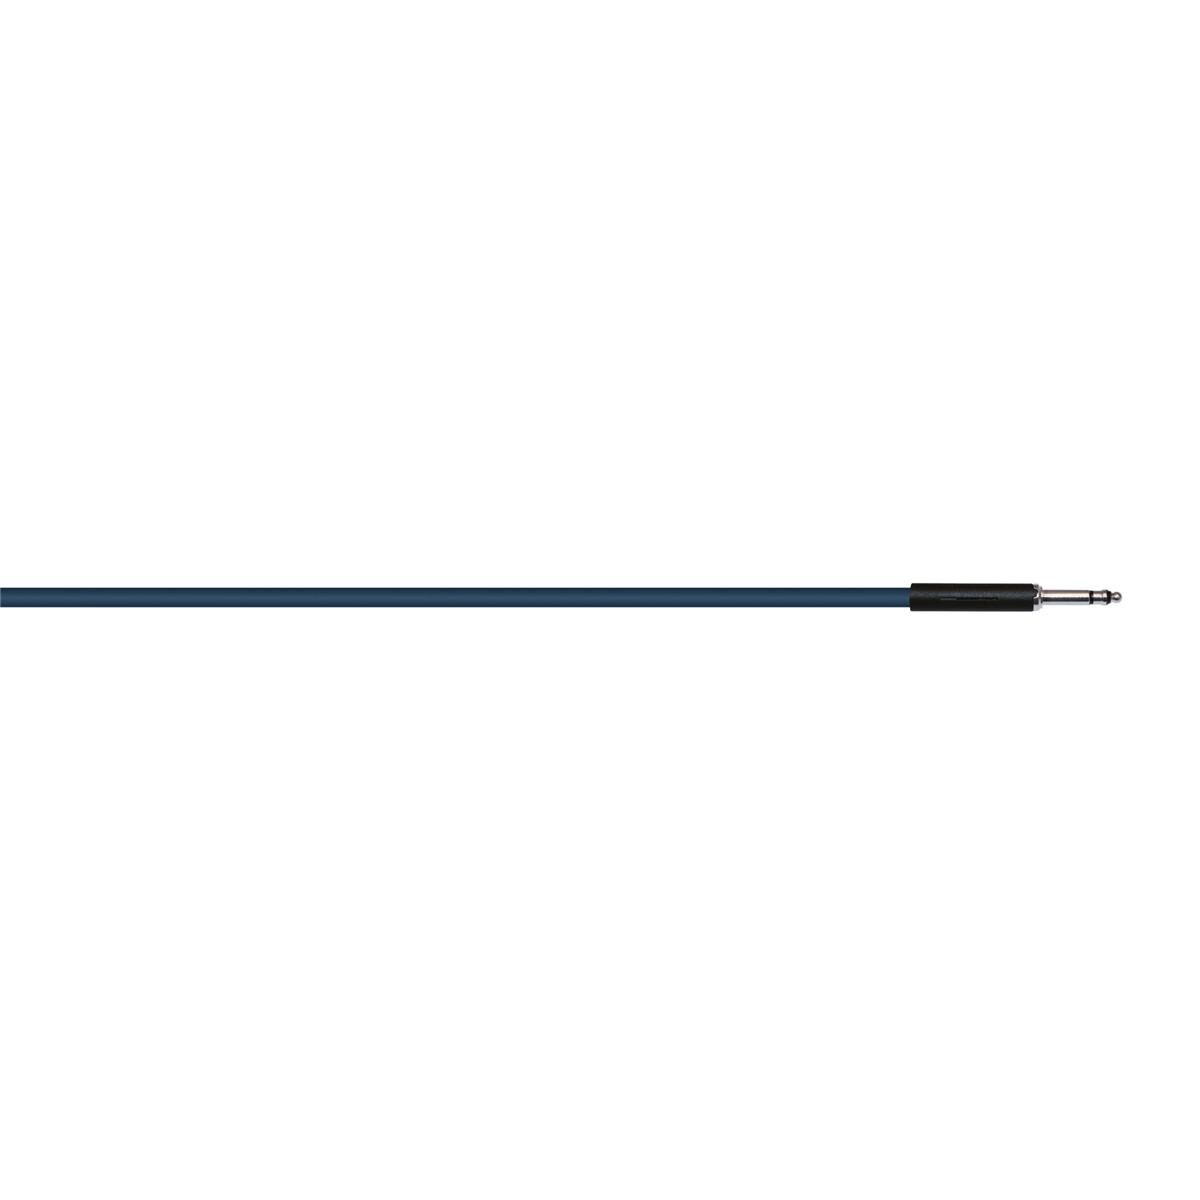 WireWorld Luna (LTT) TT Patch Cable, 2' (0.6m)